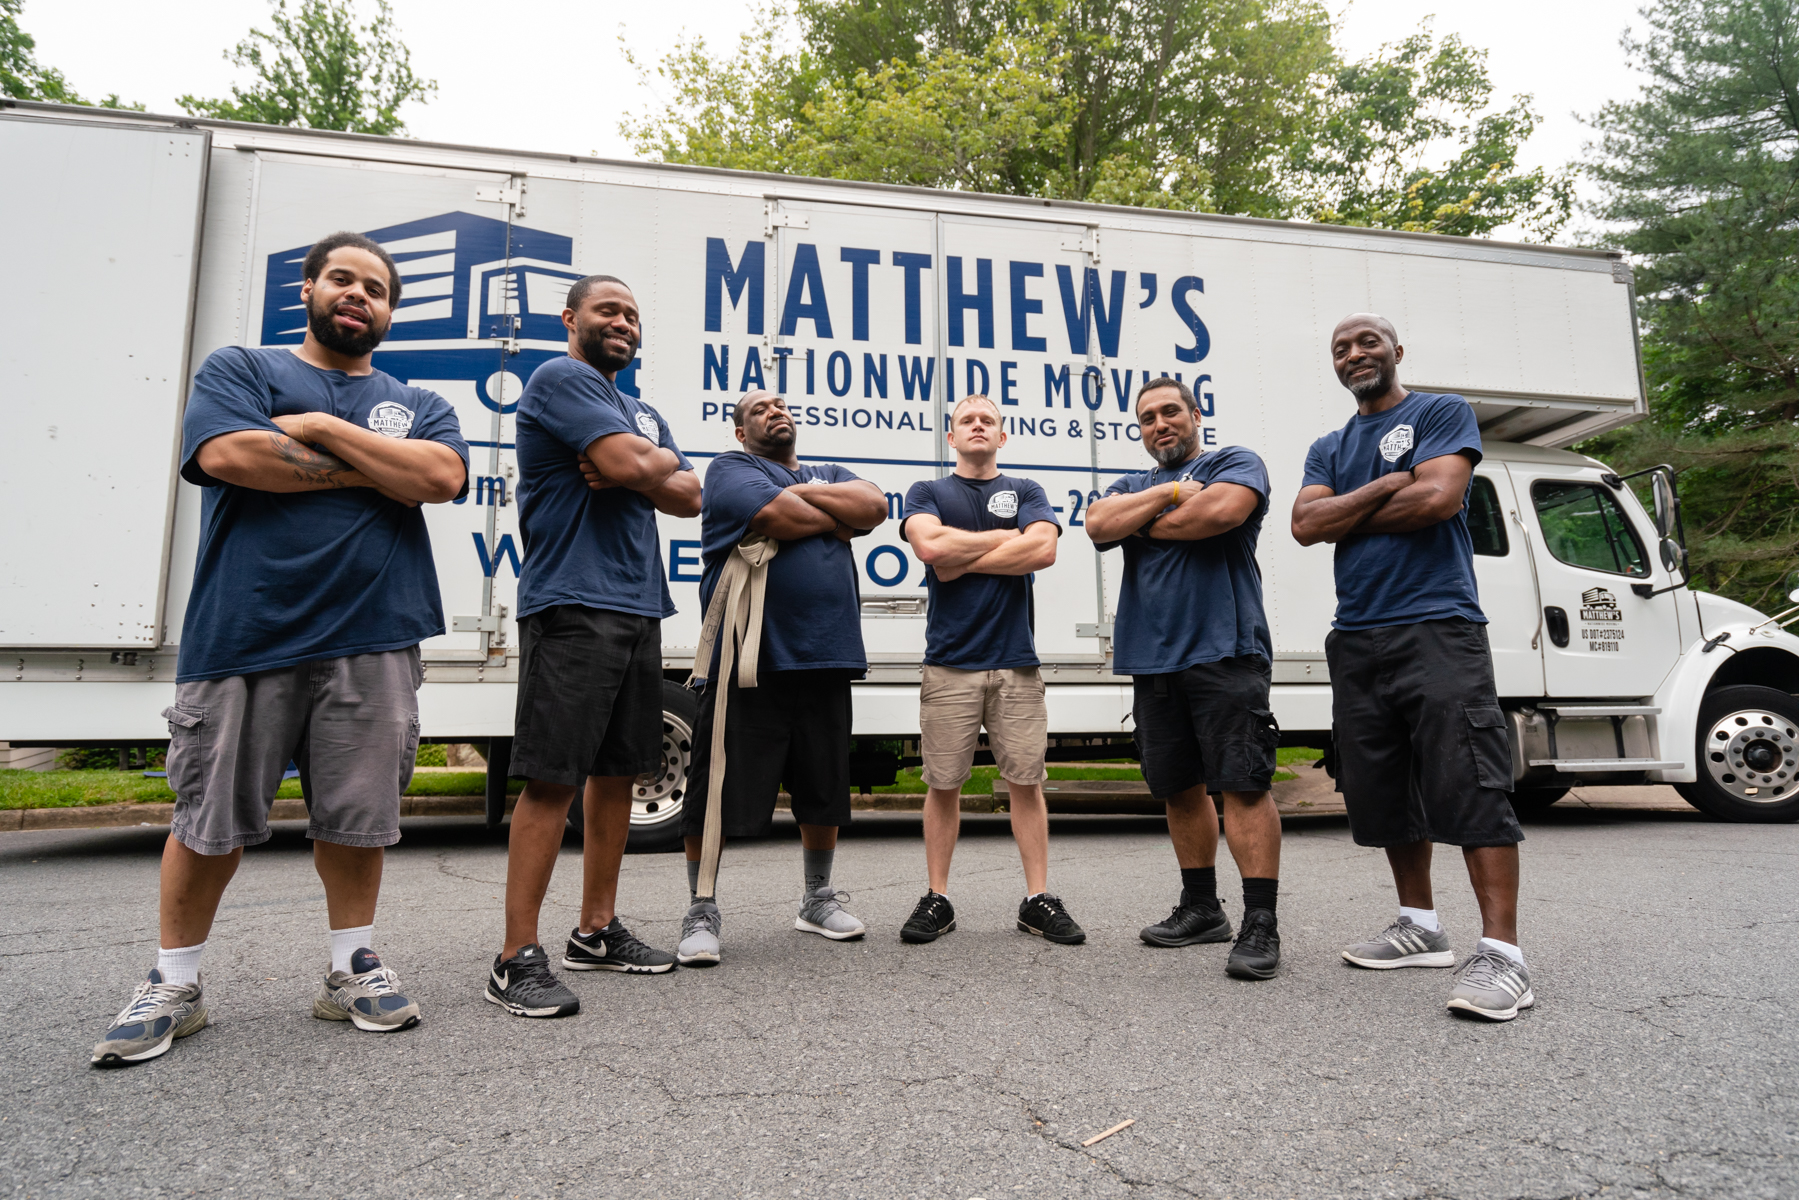 Matthew's Nationwide Moving